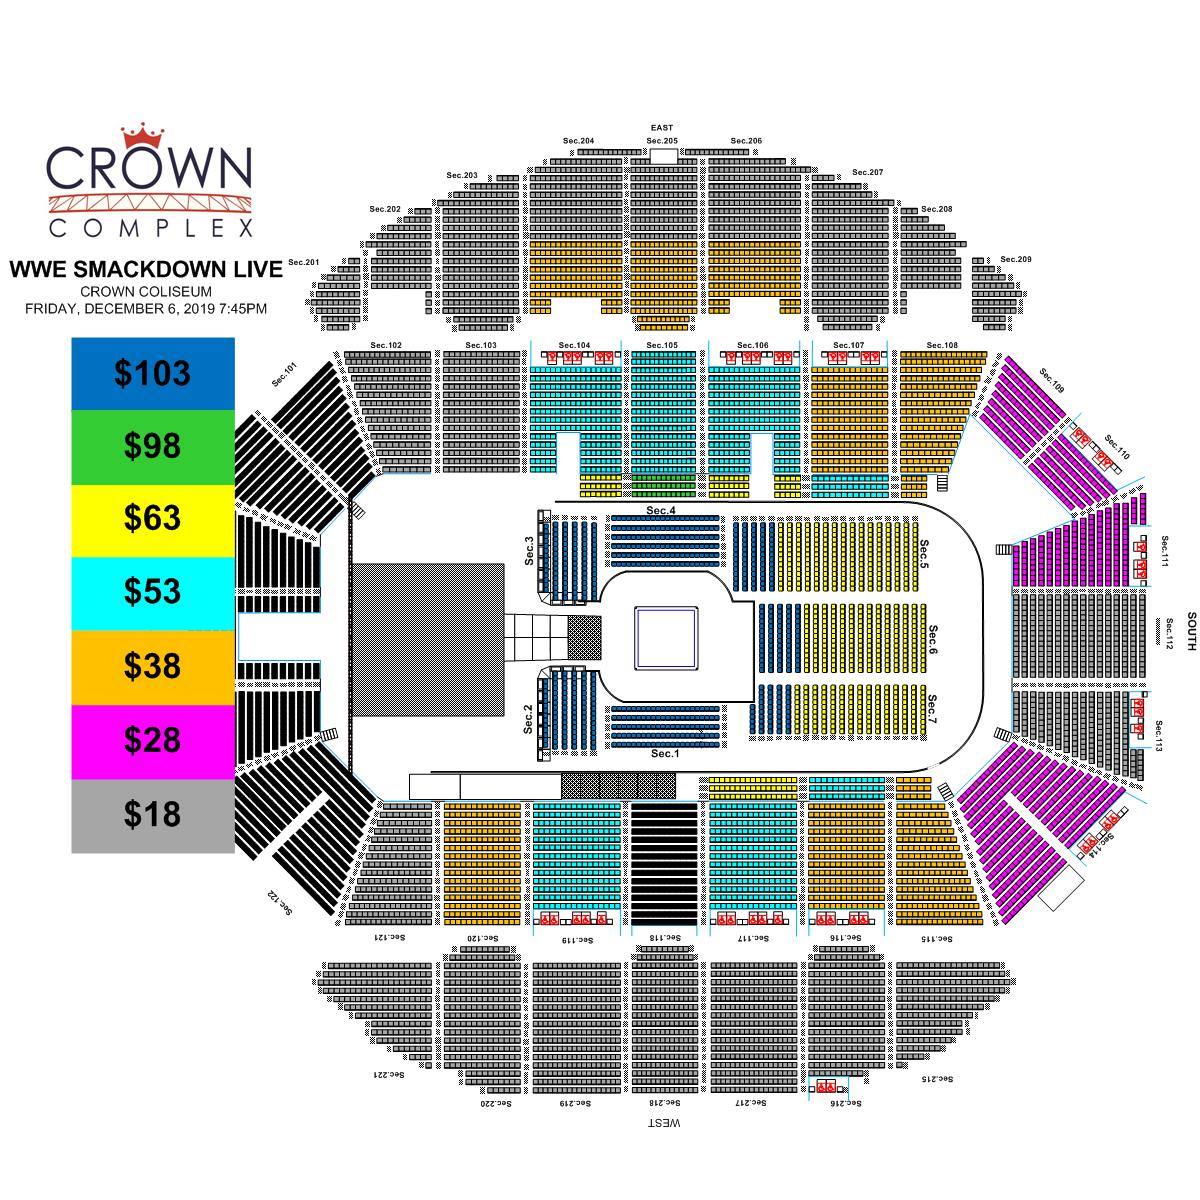 Reynolds Coliseum Seating Chart